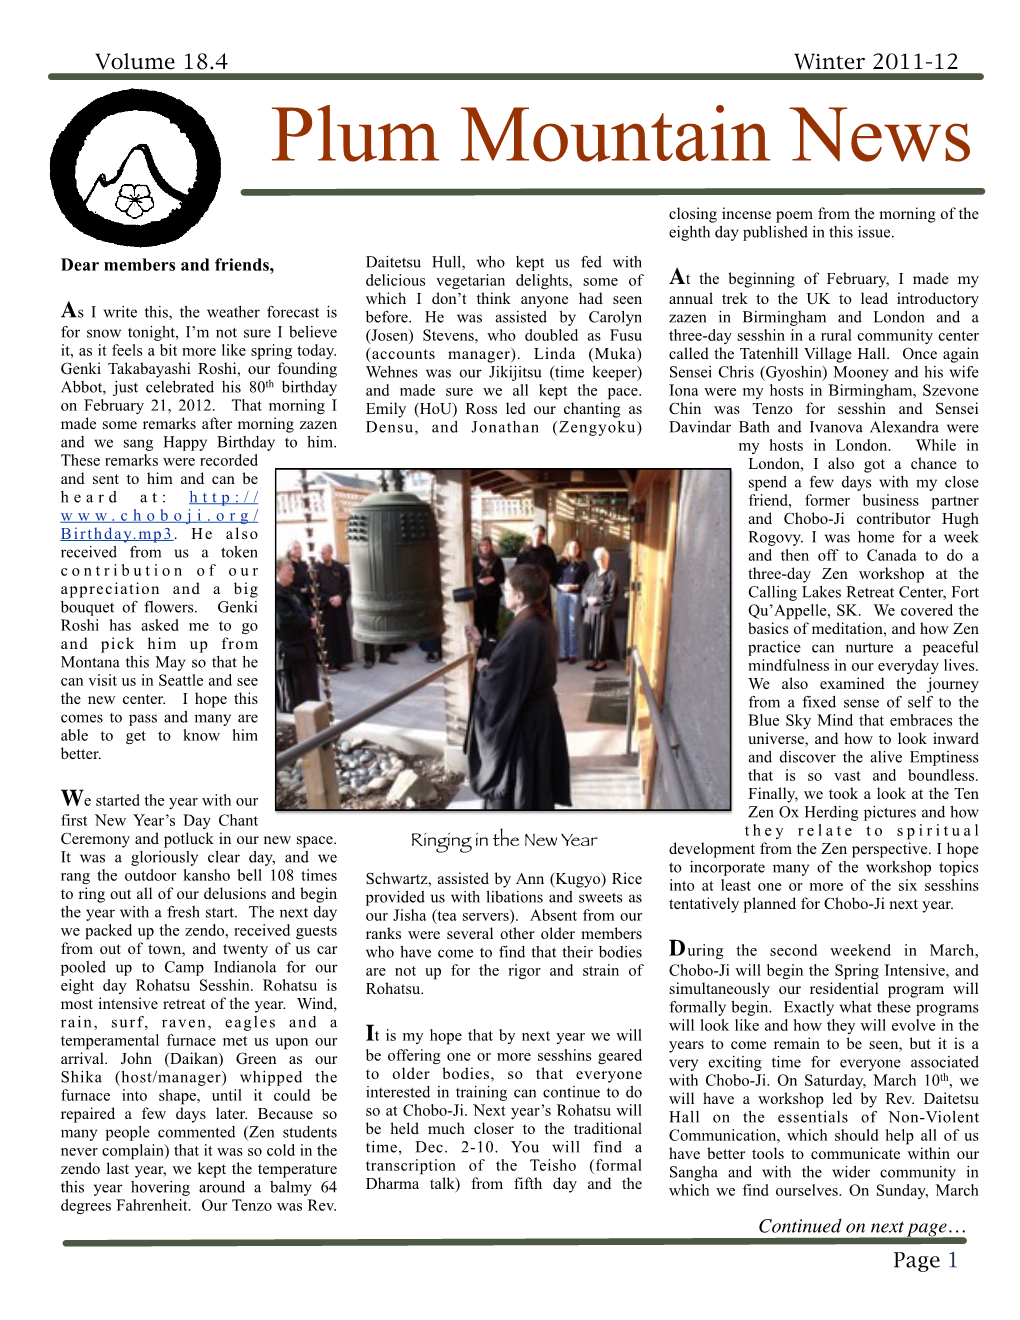 Plum Mountain News